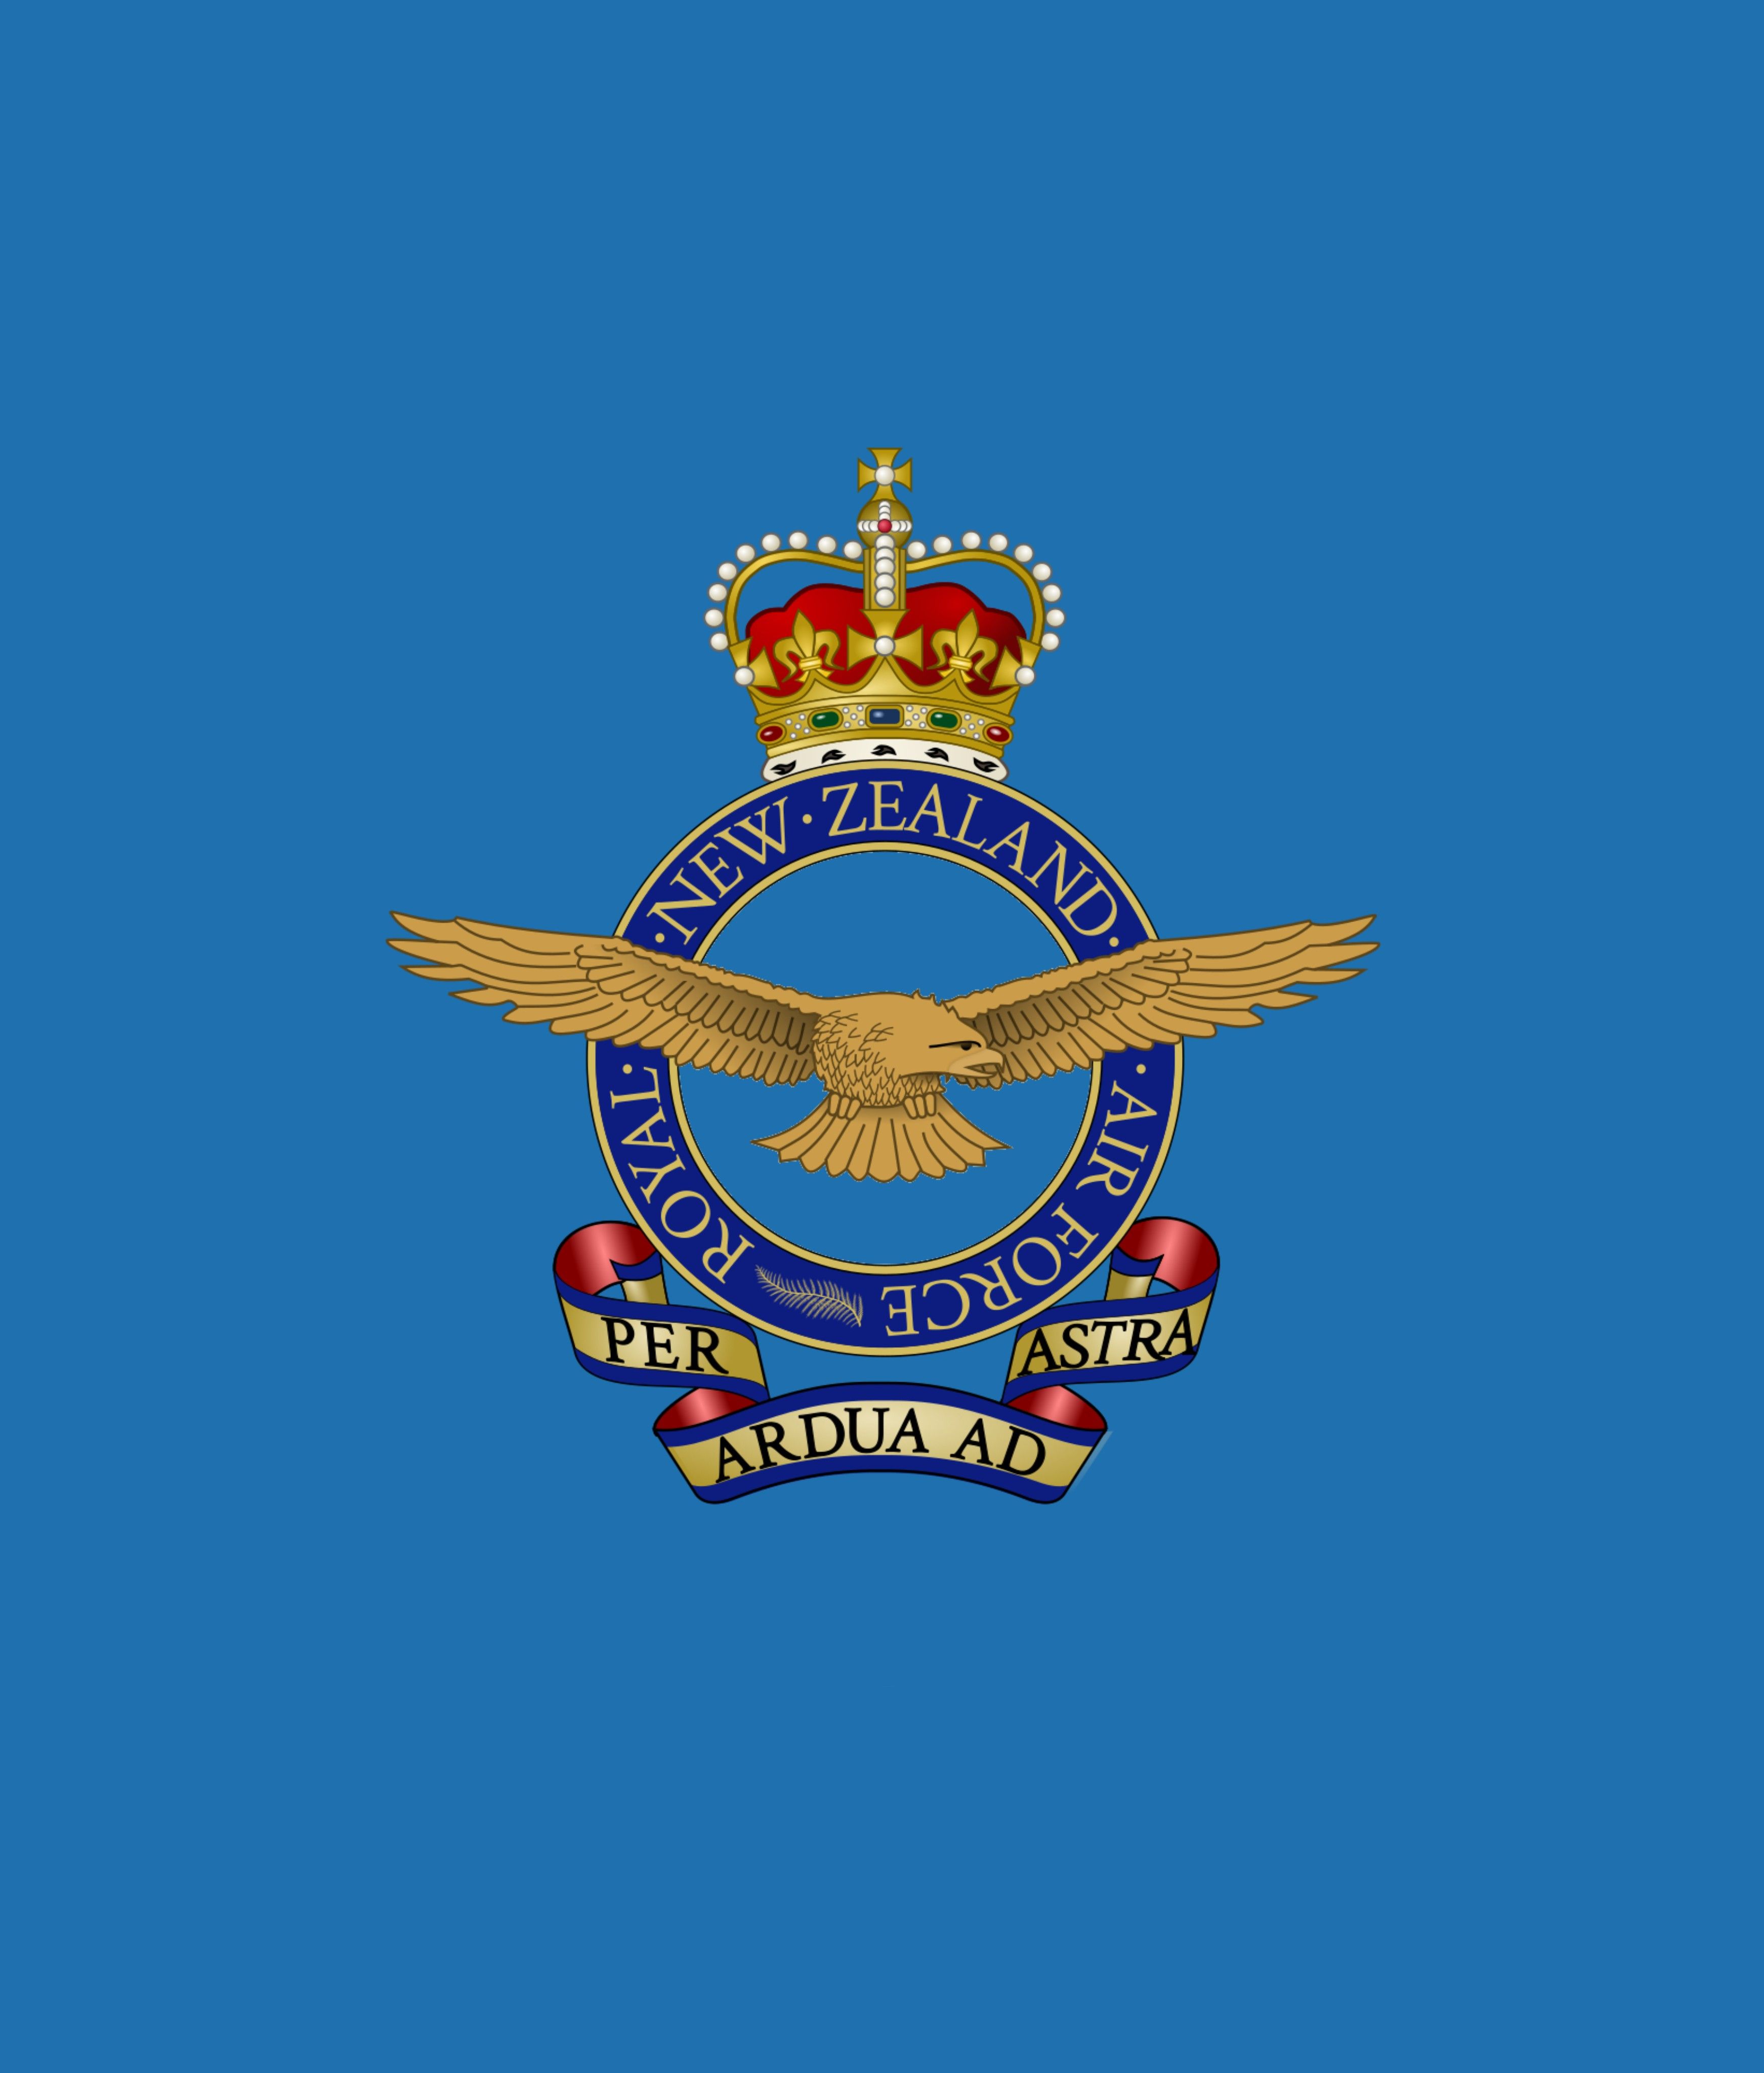 Royal New Zealand Air Force fav Military Badge Air force